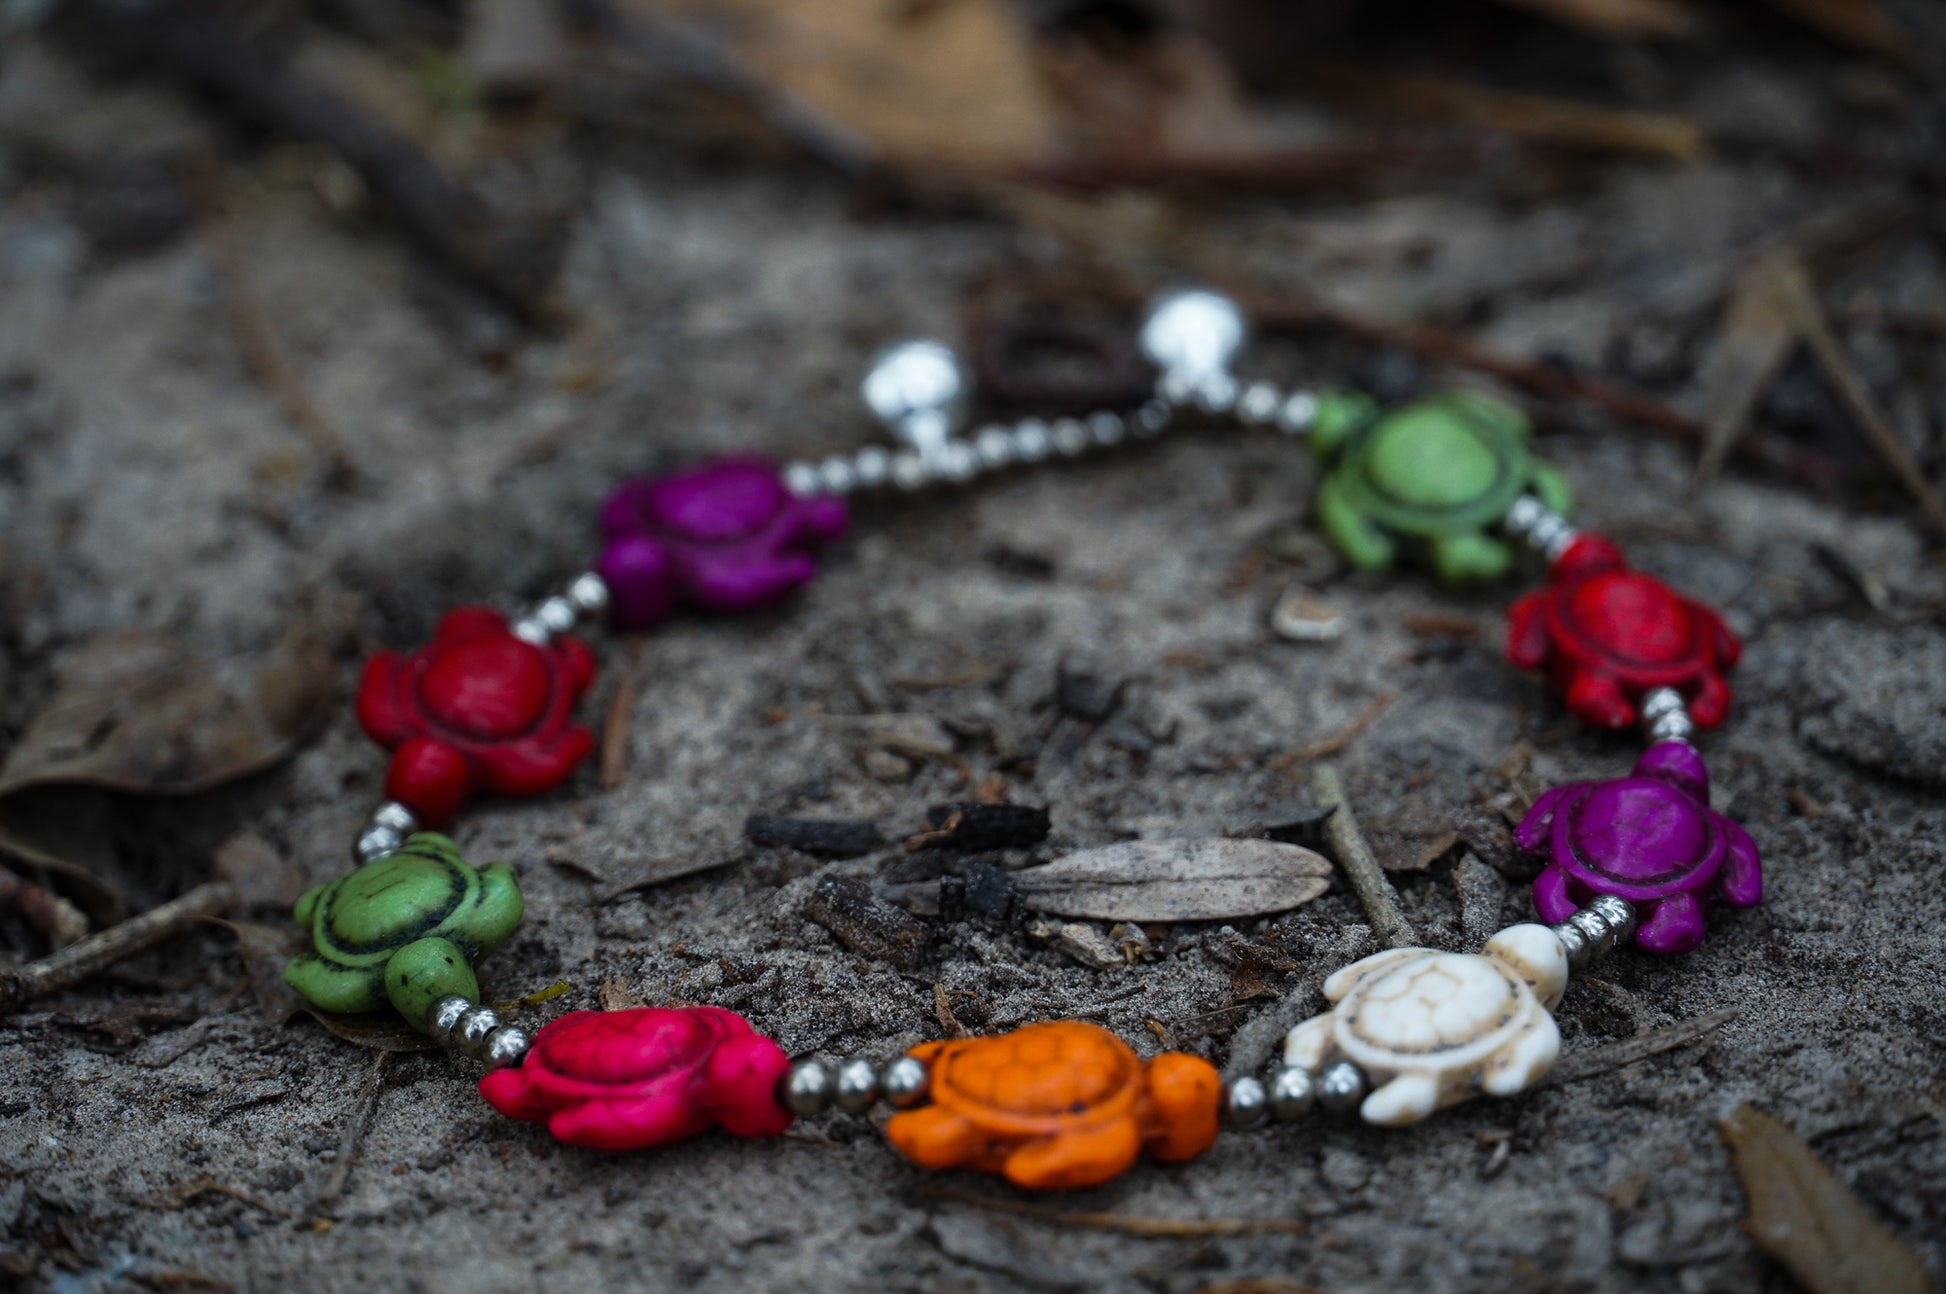 Colorful Turtle Boho Silver Anklet - ONEZINOTTA , jewelery that shines like gold...